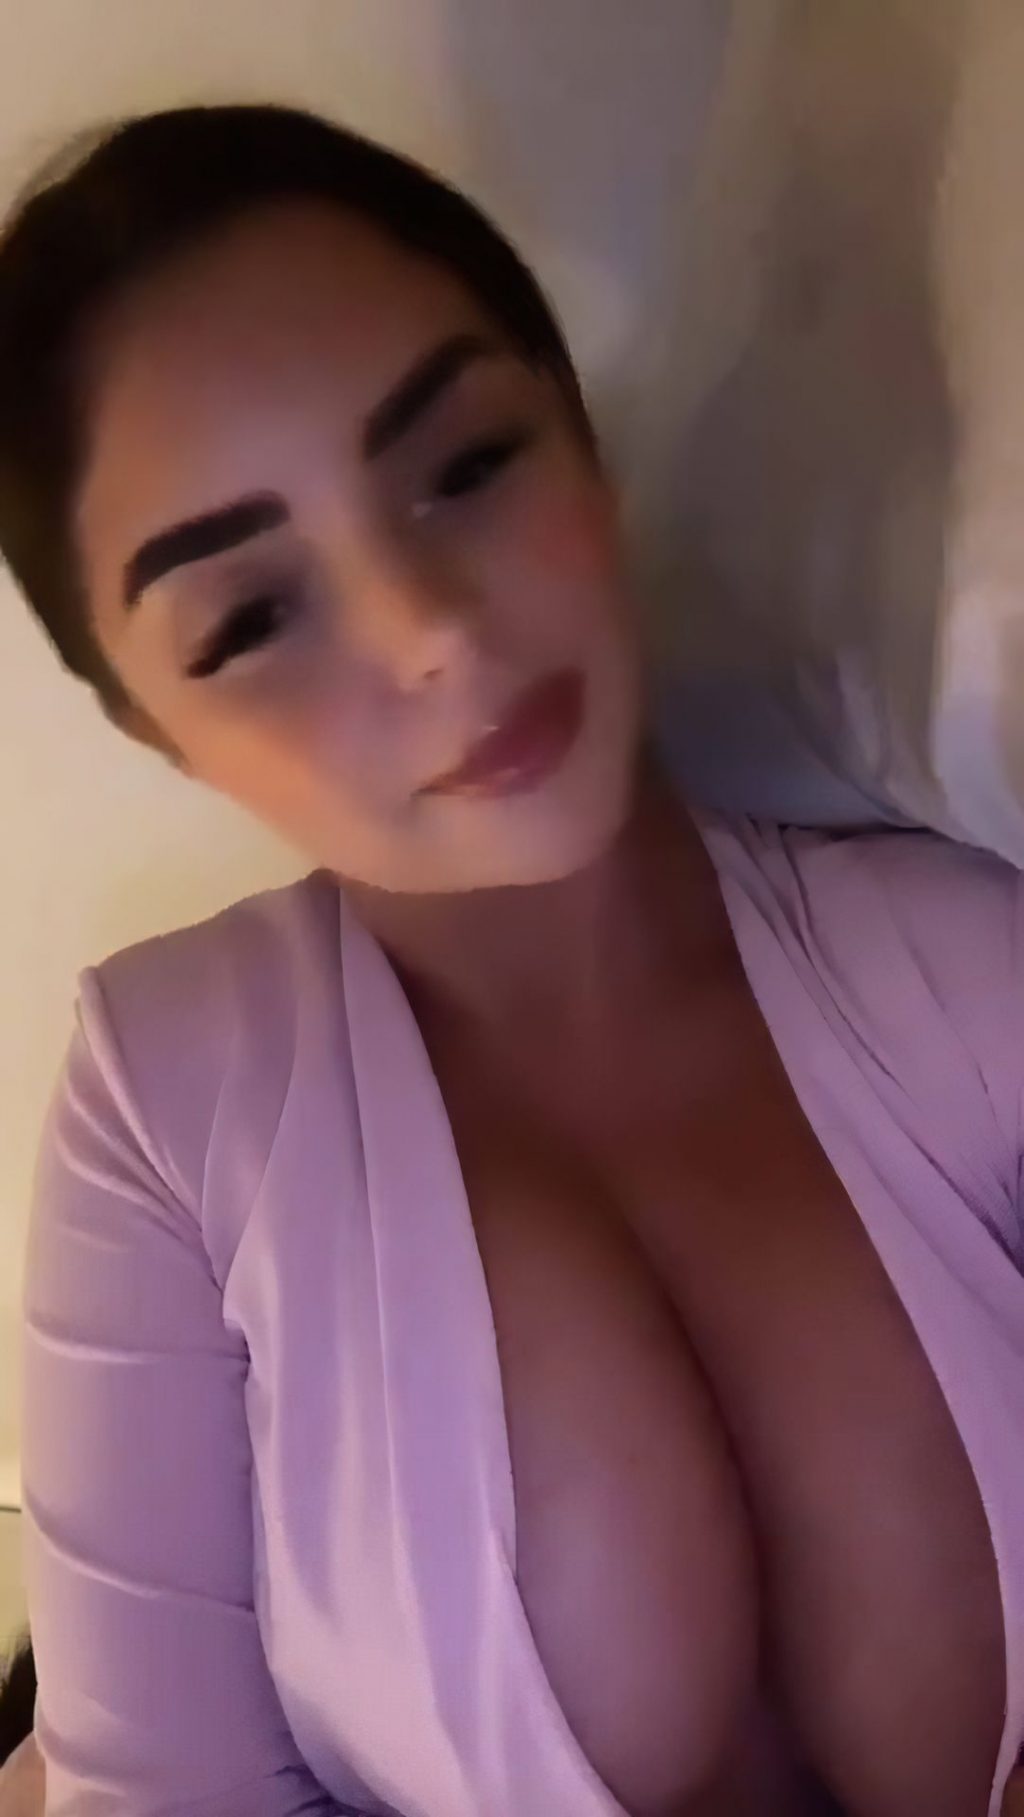 Demi rose mawby tits